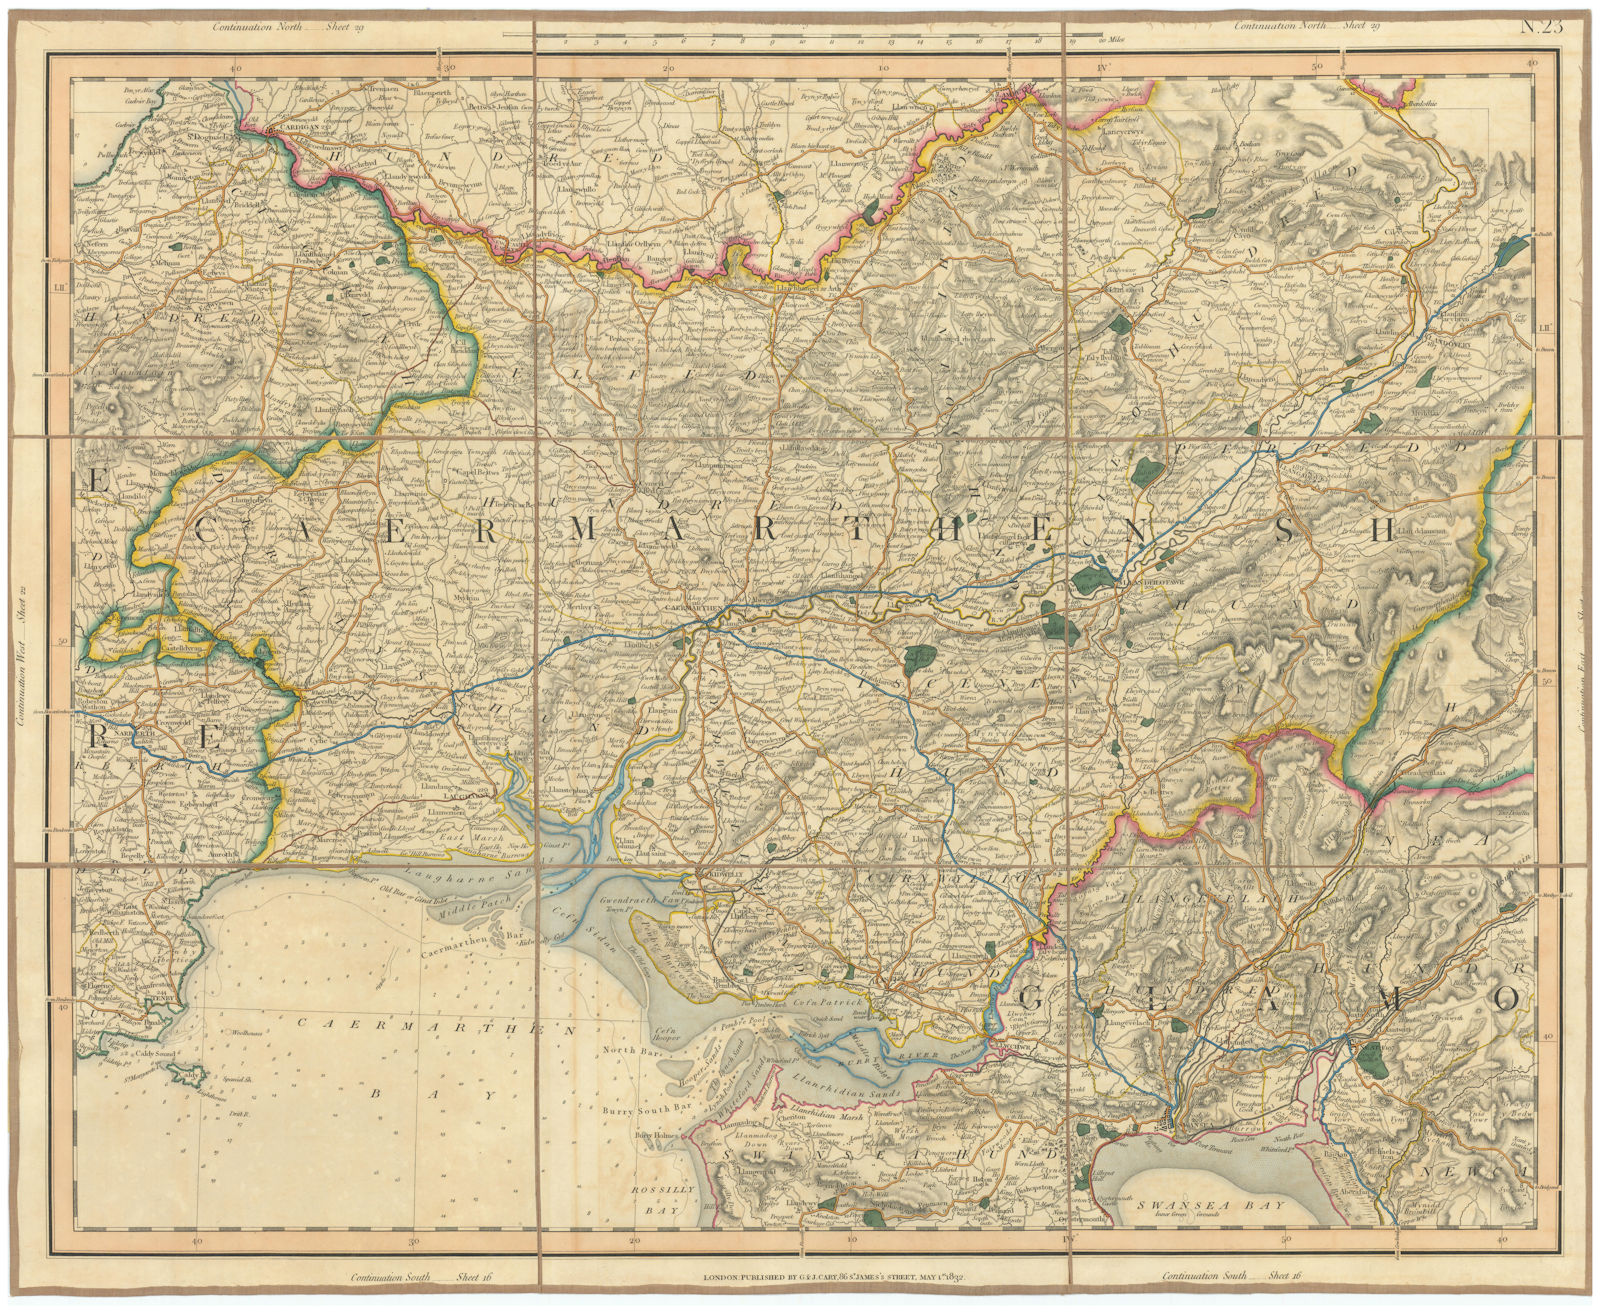 CARMARTHENSHIRE & GOWER PENINSULA. West Glamorganshire. CARY 1832 old map